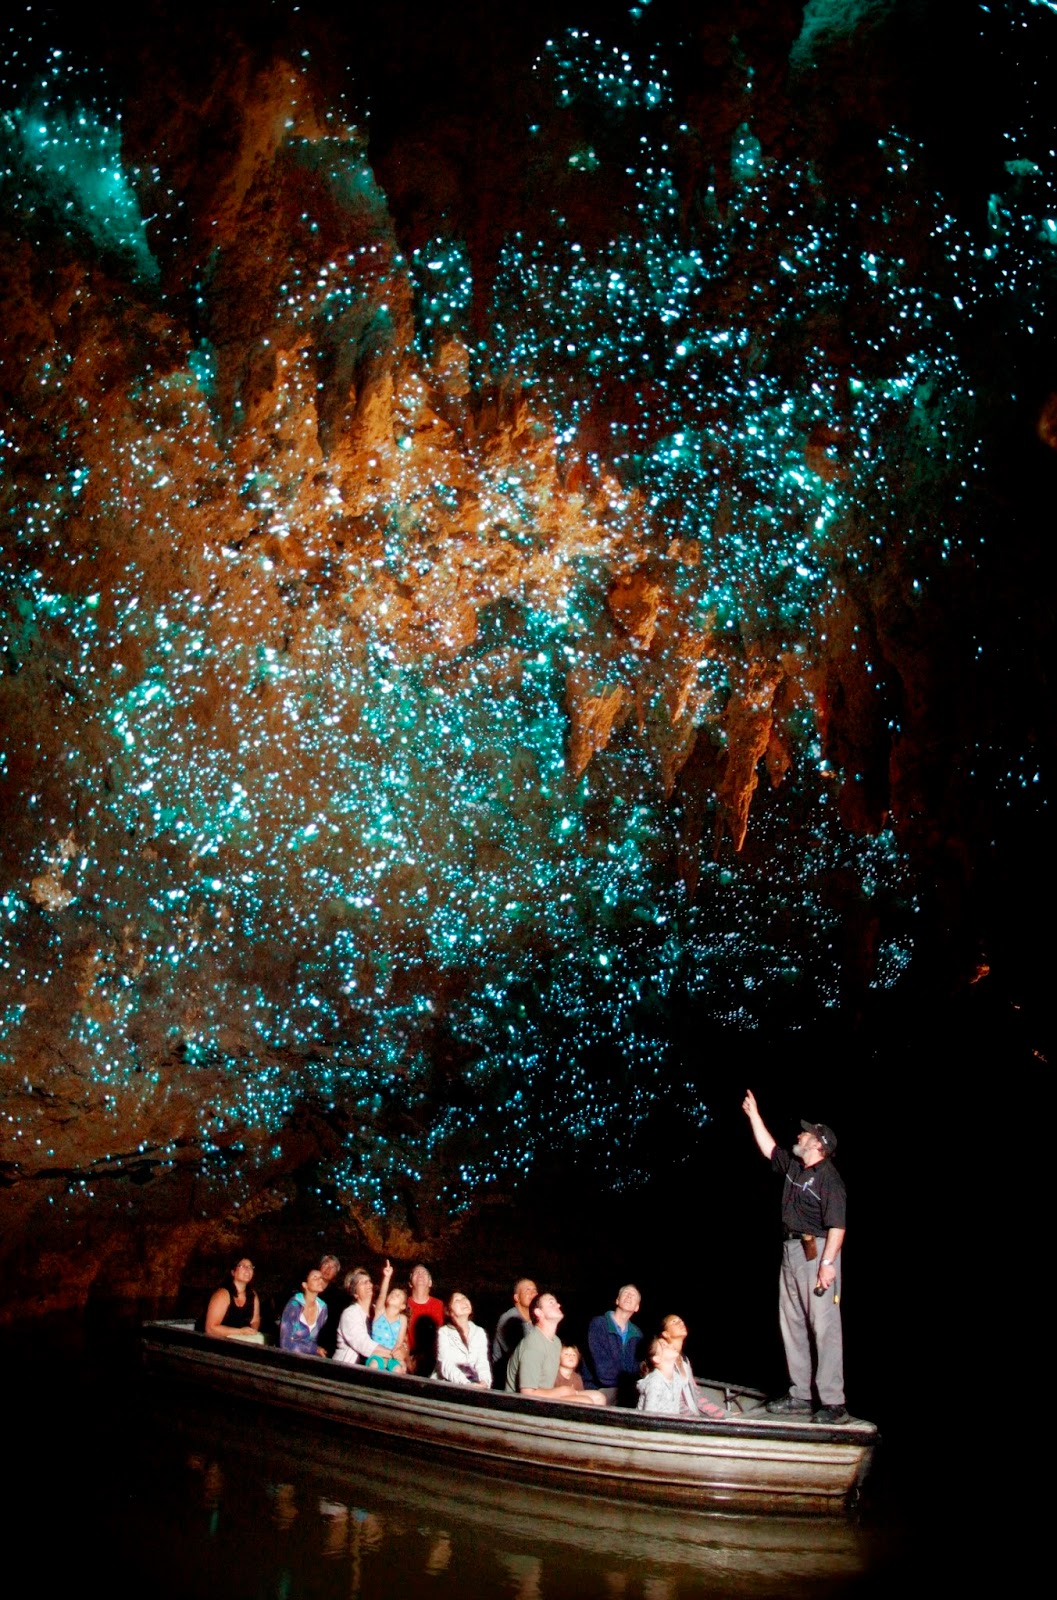 Glowworm Cave, New Zealand